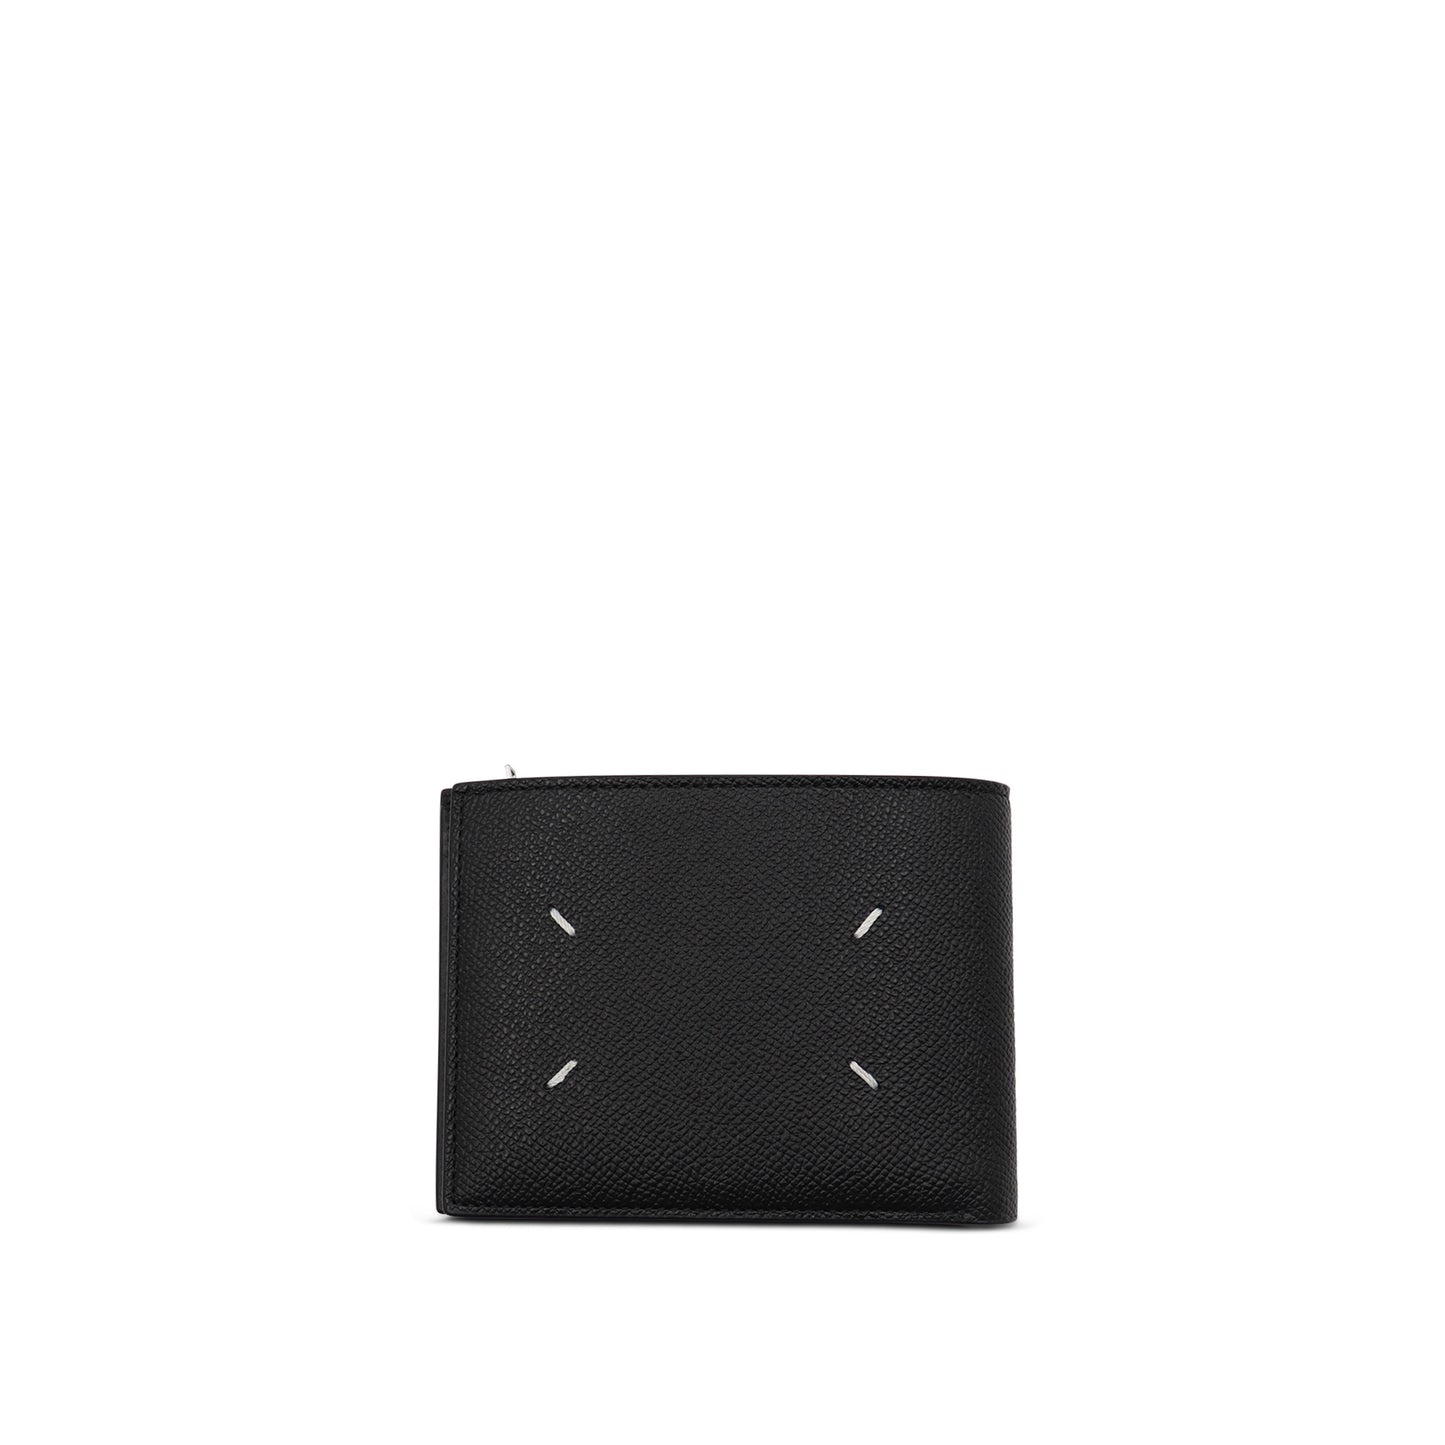 Four Stitch Flip Flap Zip Wallet in Black